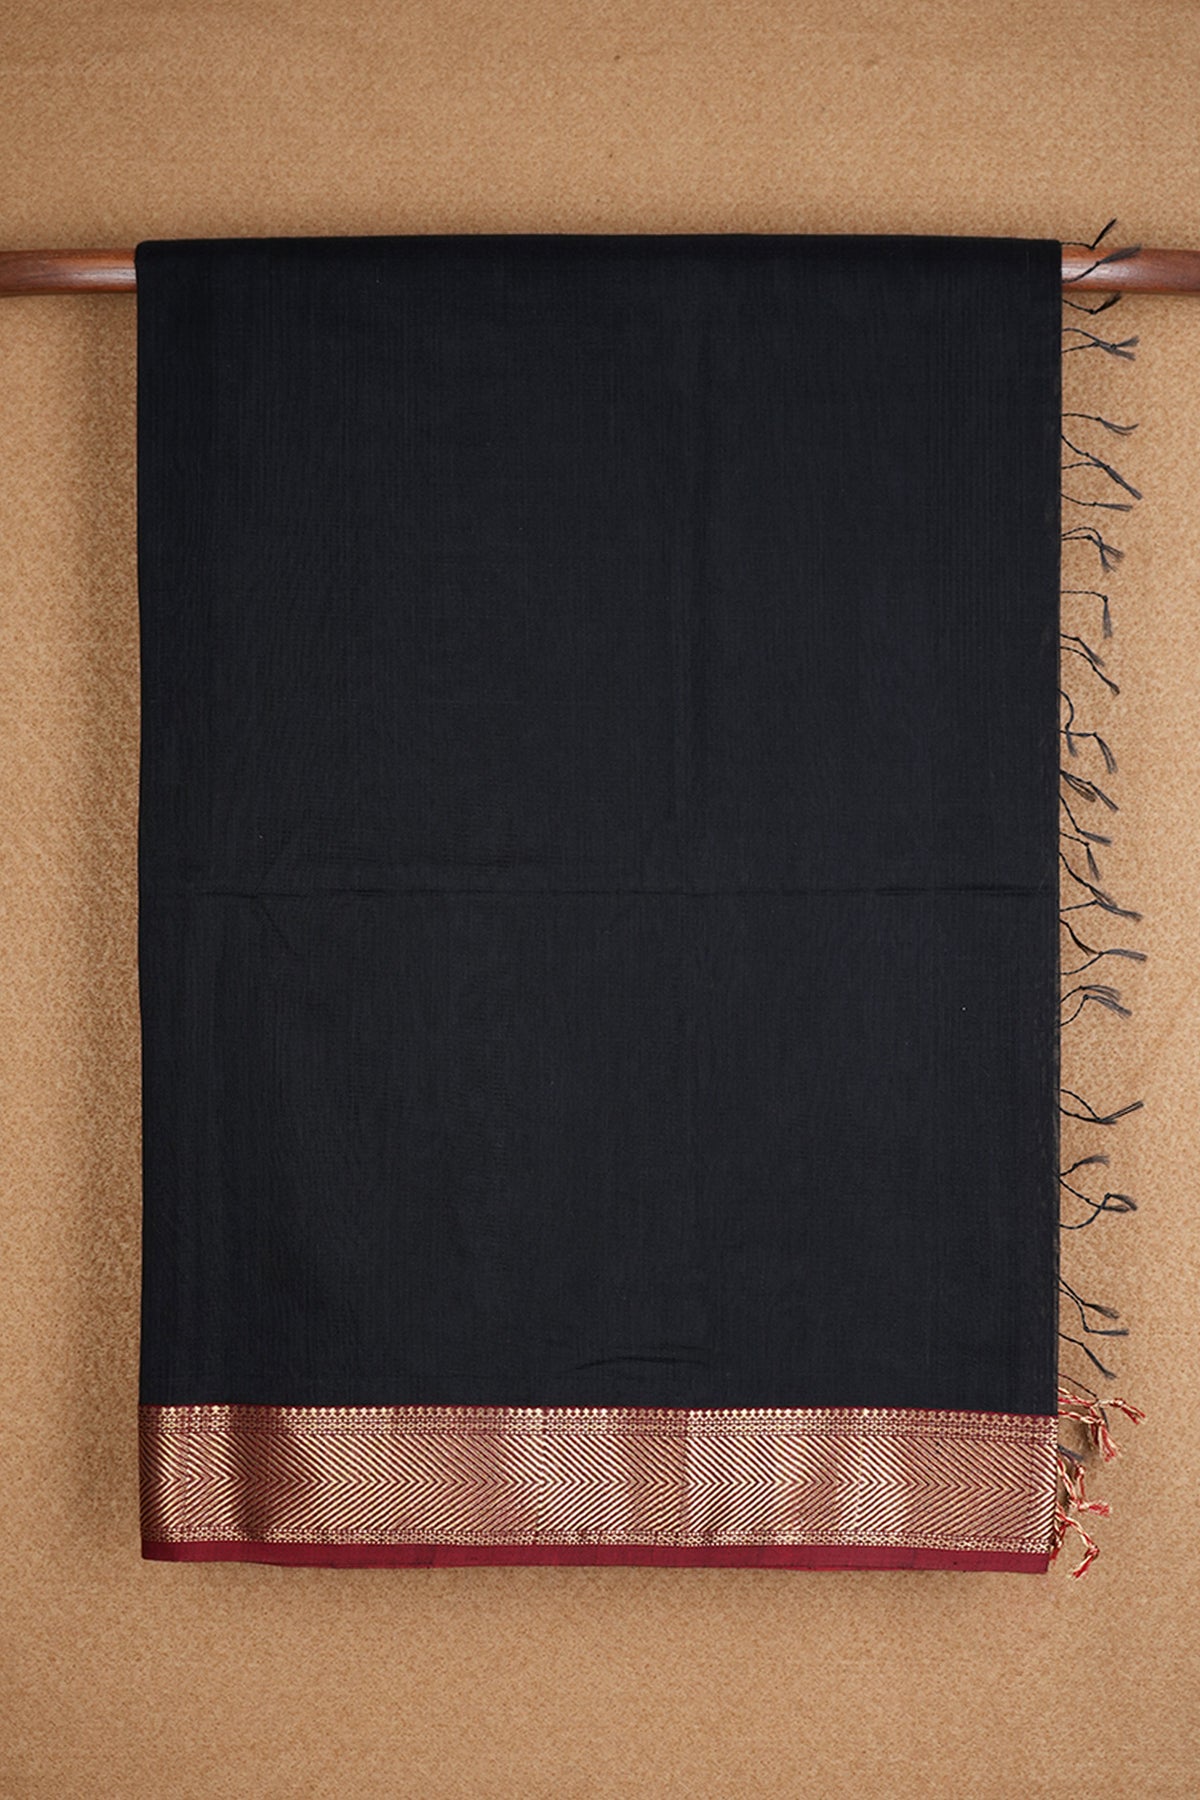 Vanki Design Zari Border With Plain Black Maheswari Silk Cotton Saree